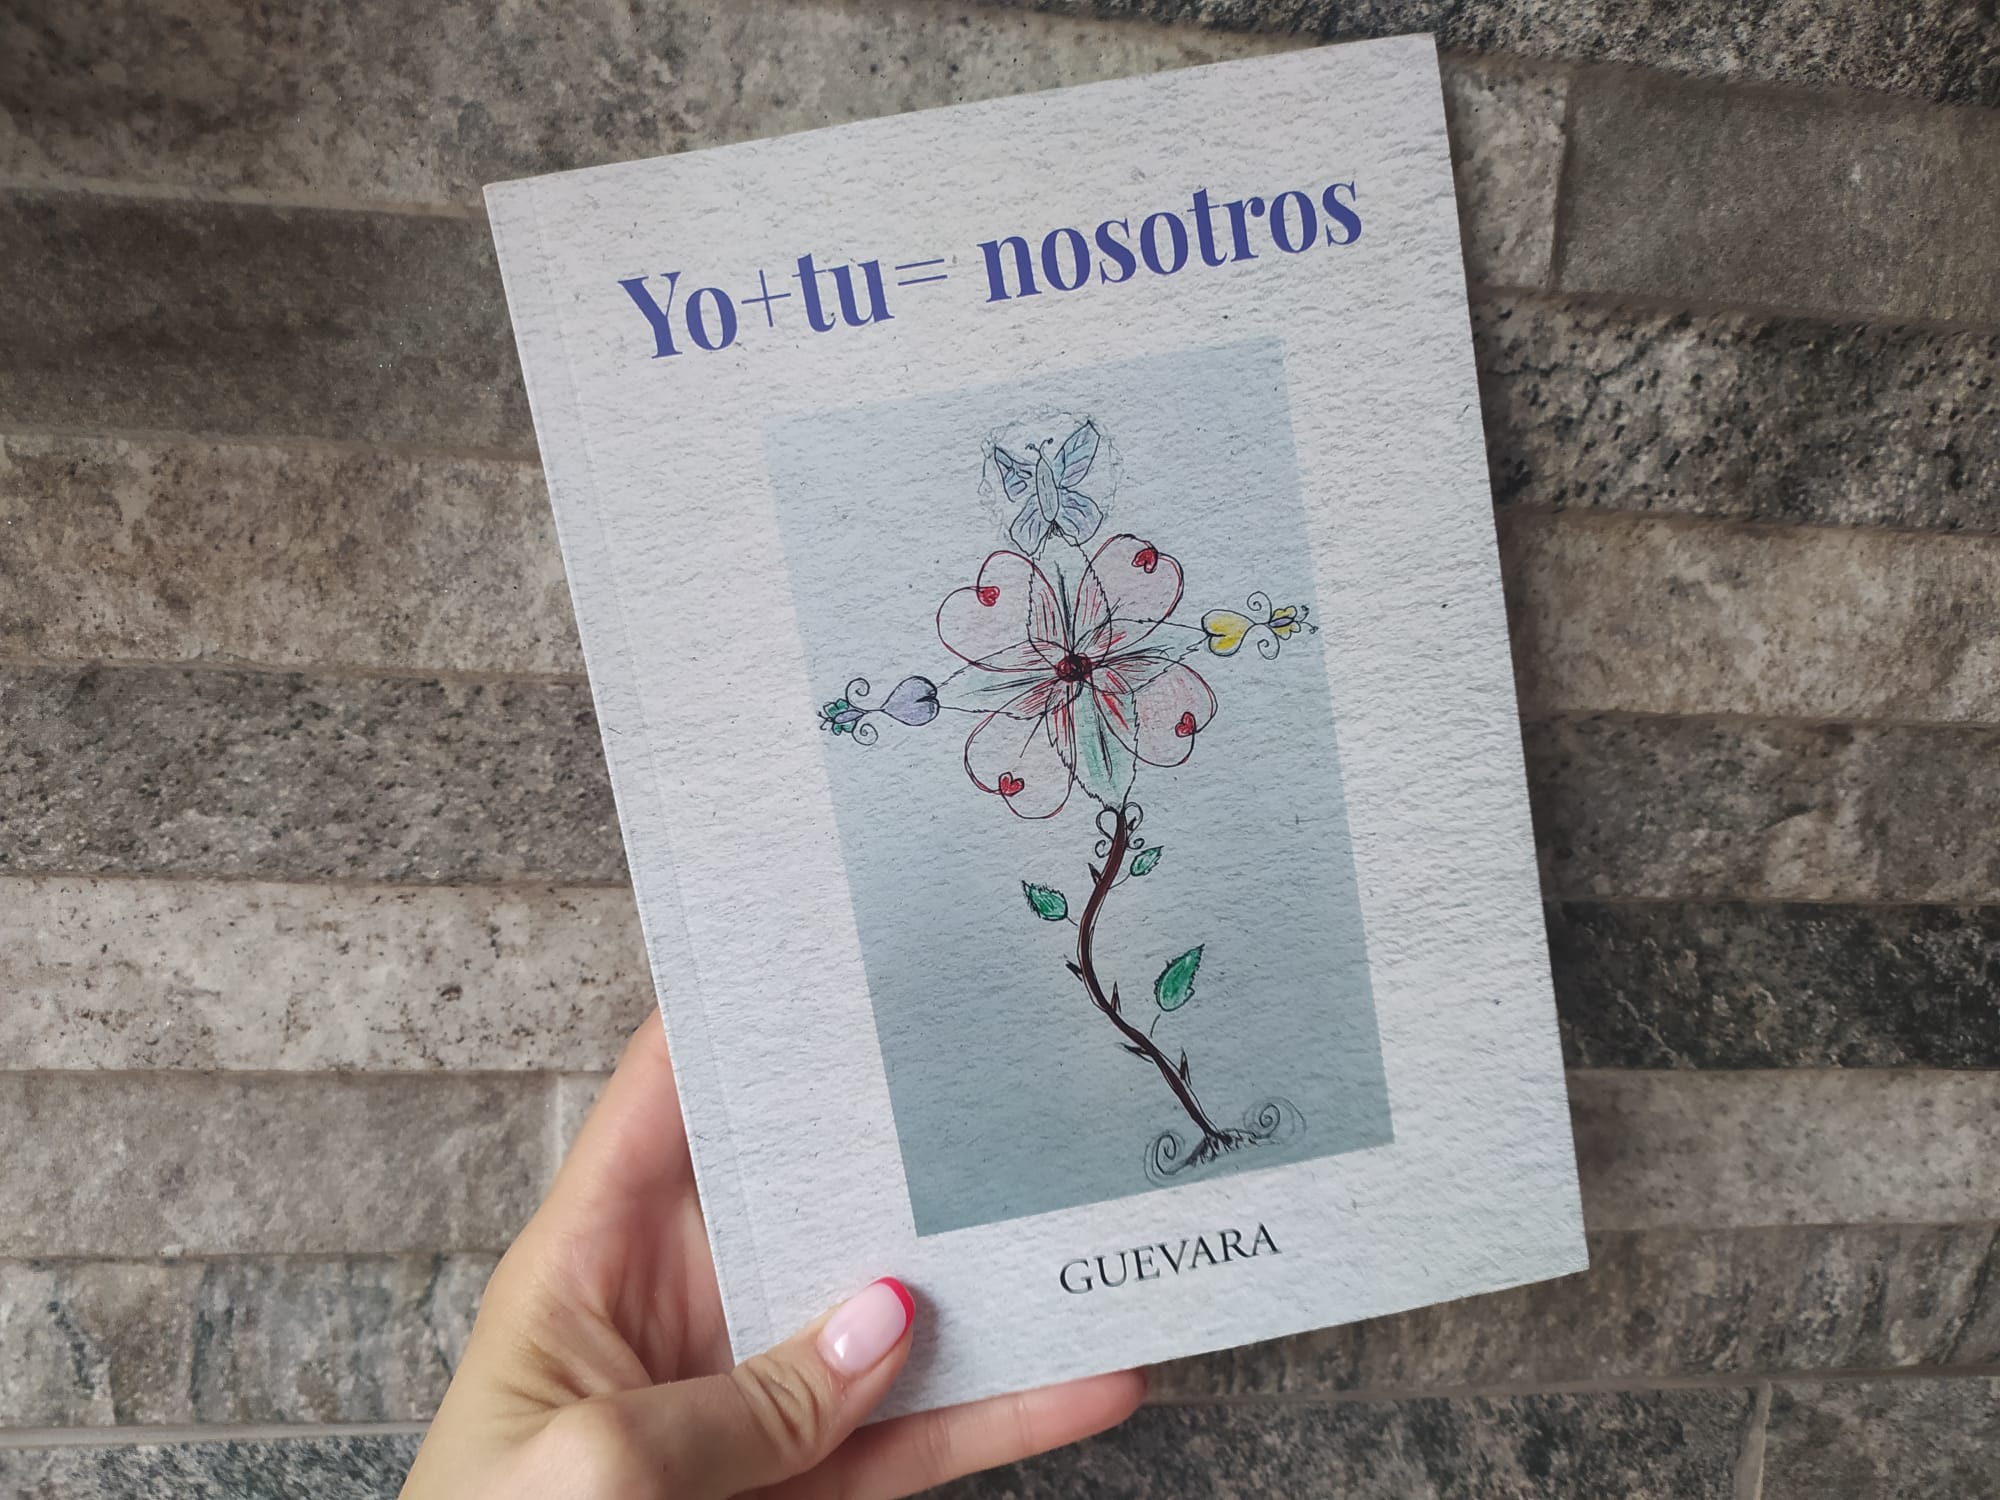 Reseña de “Yo+tu= nosotros”, de Guevara | Por Daniela González